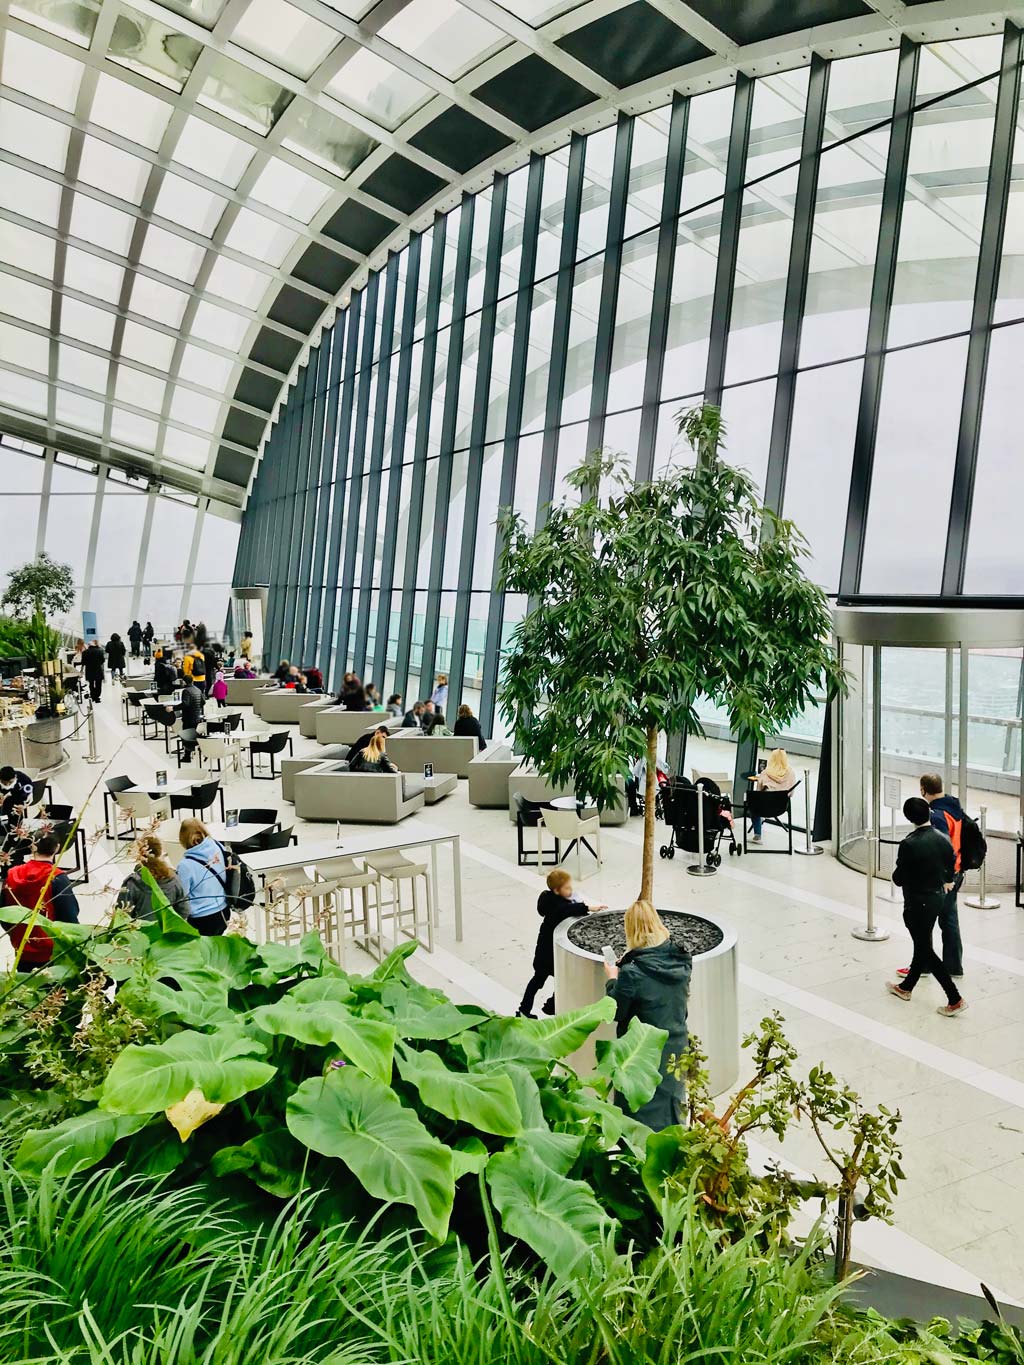 London's Sky Garden milestone signals rising popularity of elevated public spaces